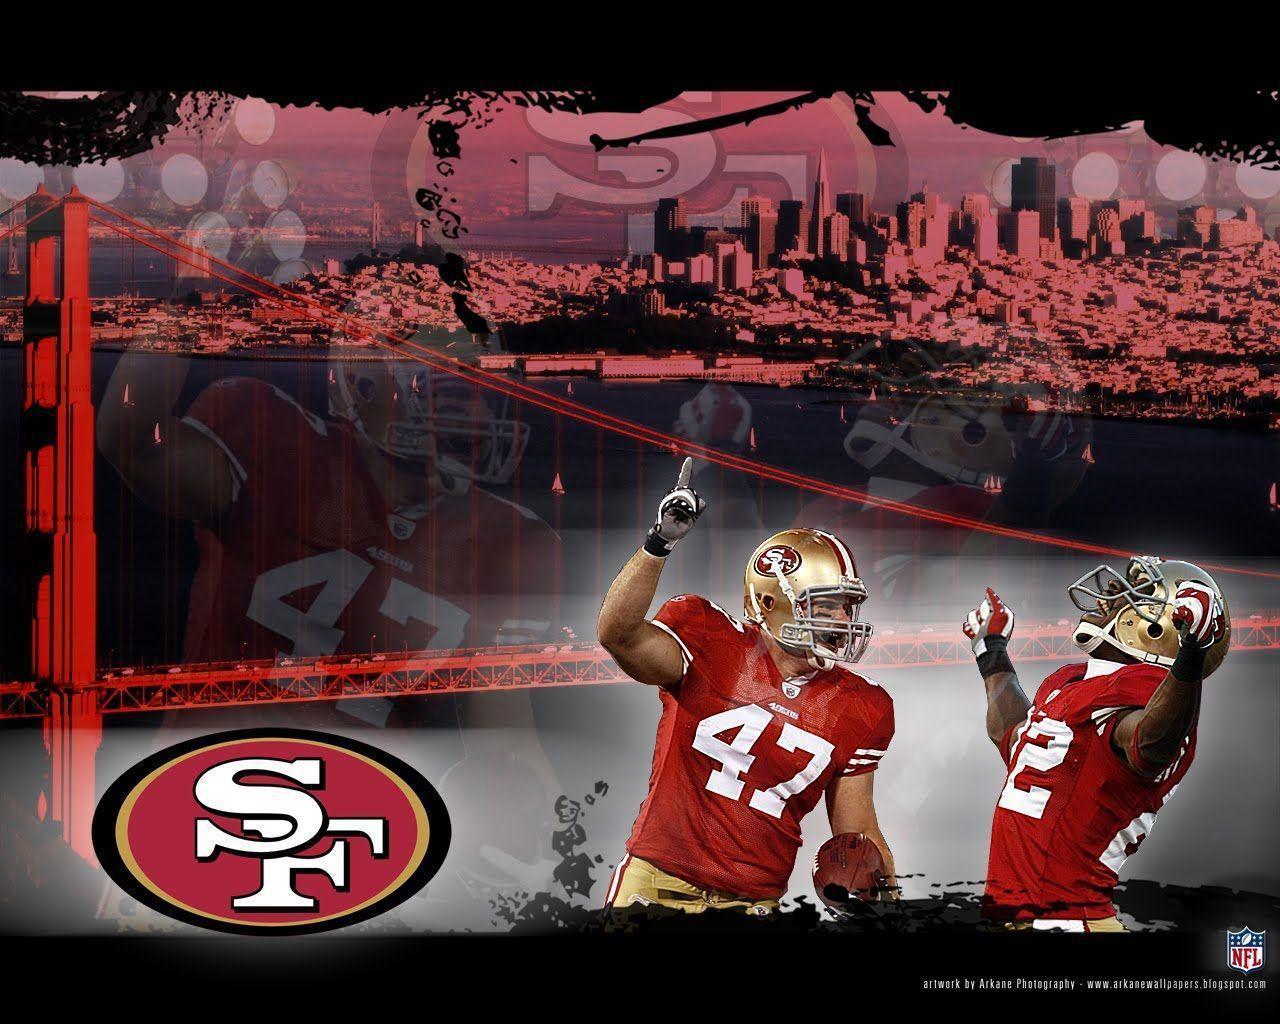 New San Francisco 49ers wallpaper background. San Francisco 49ers